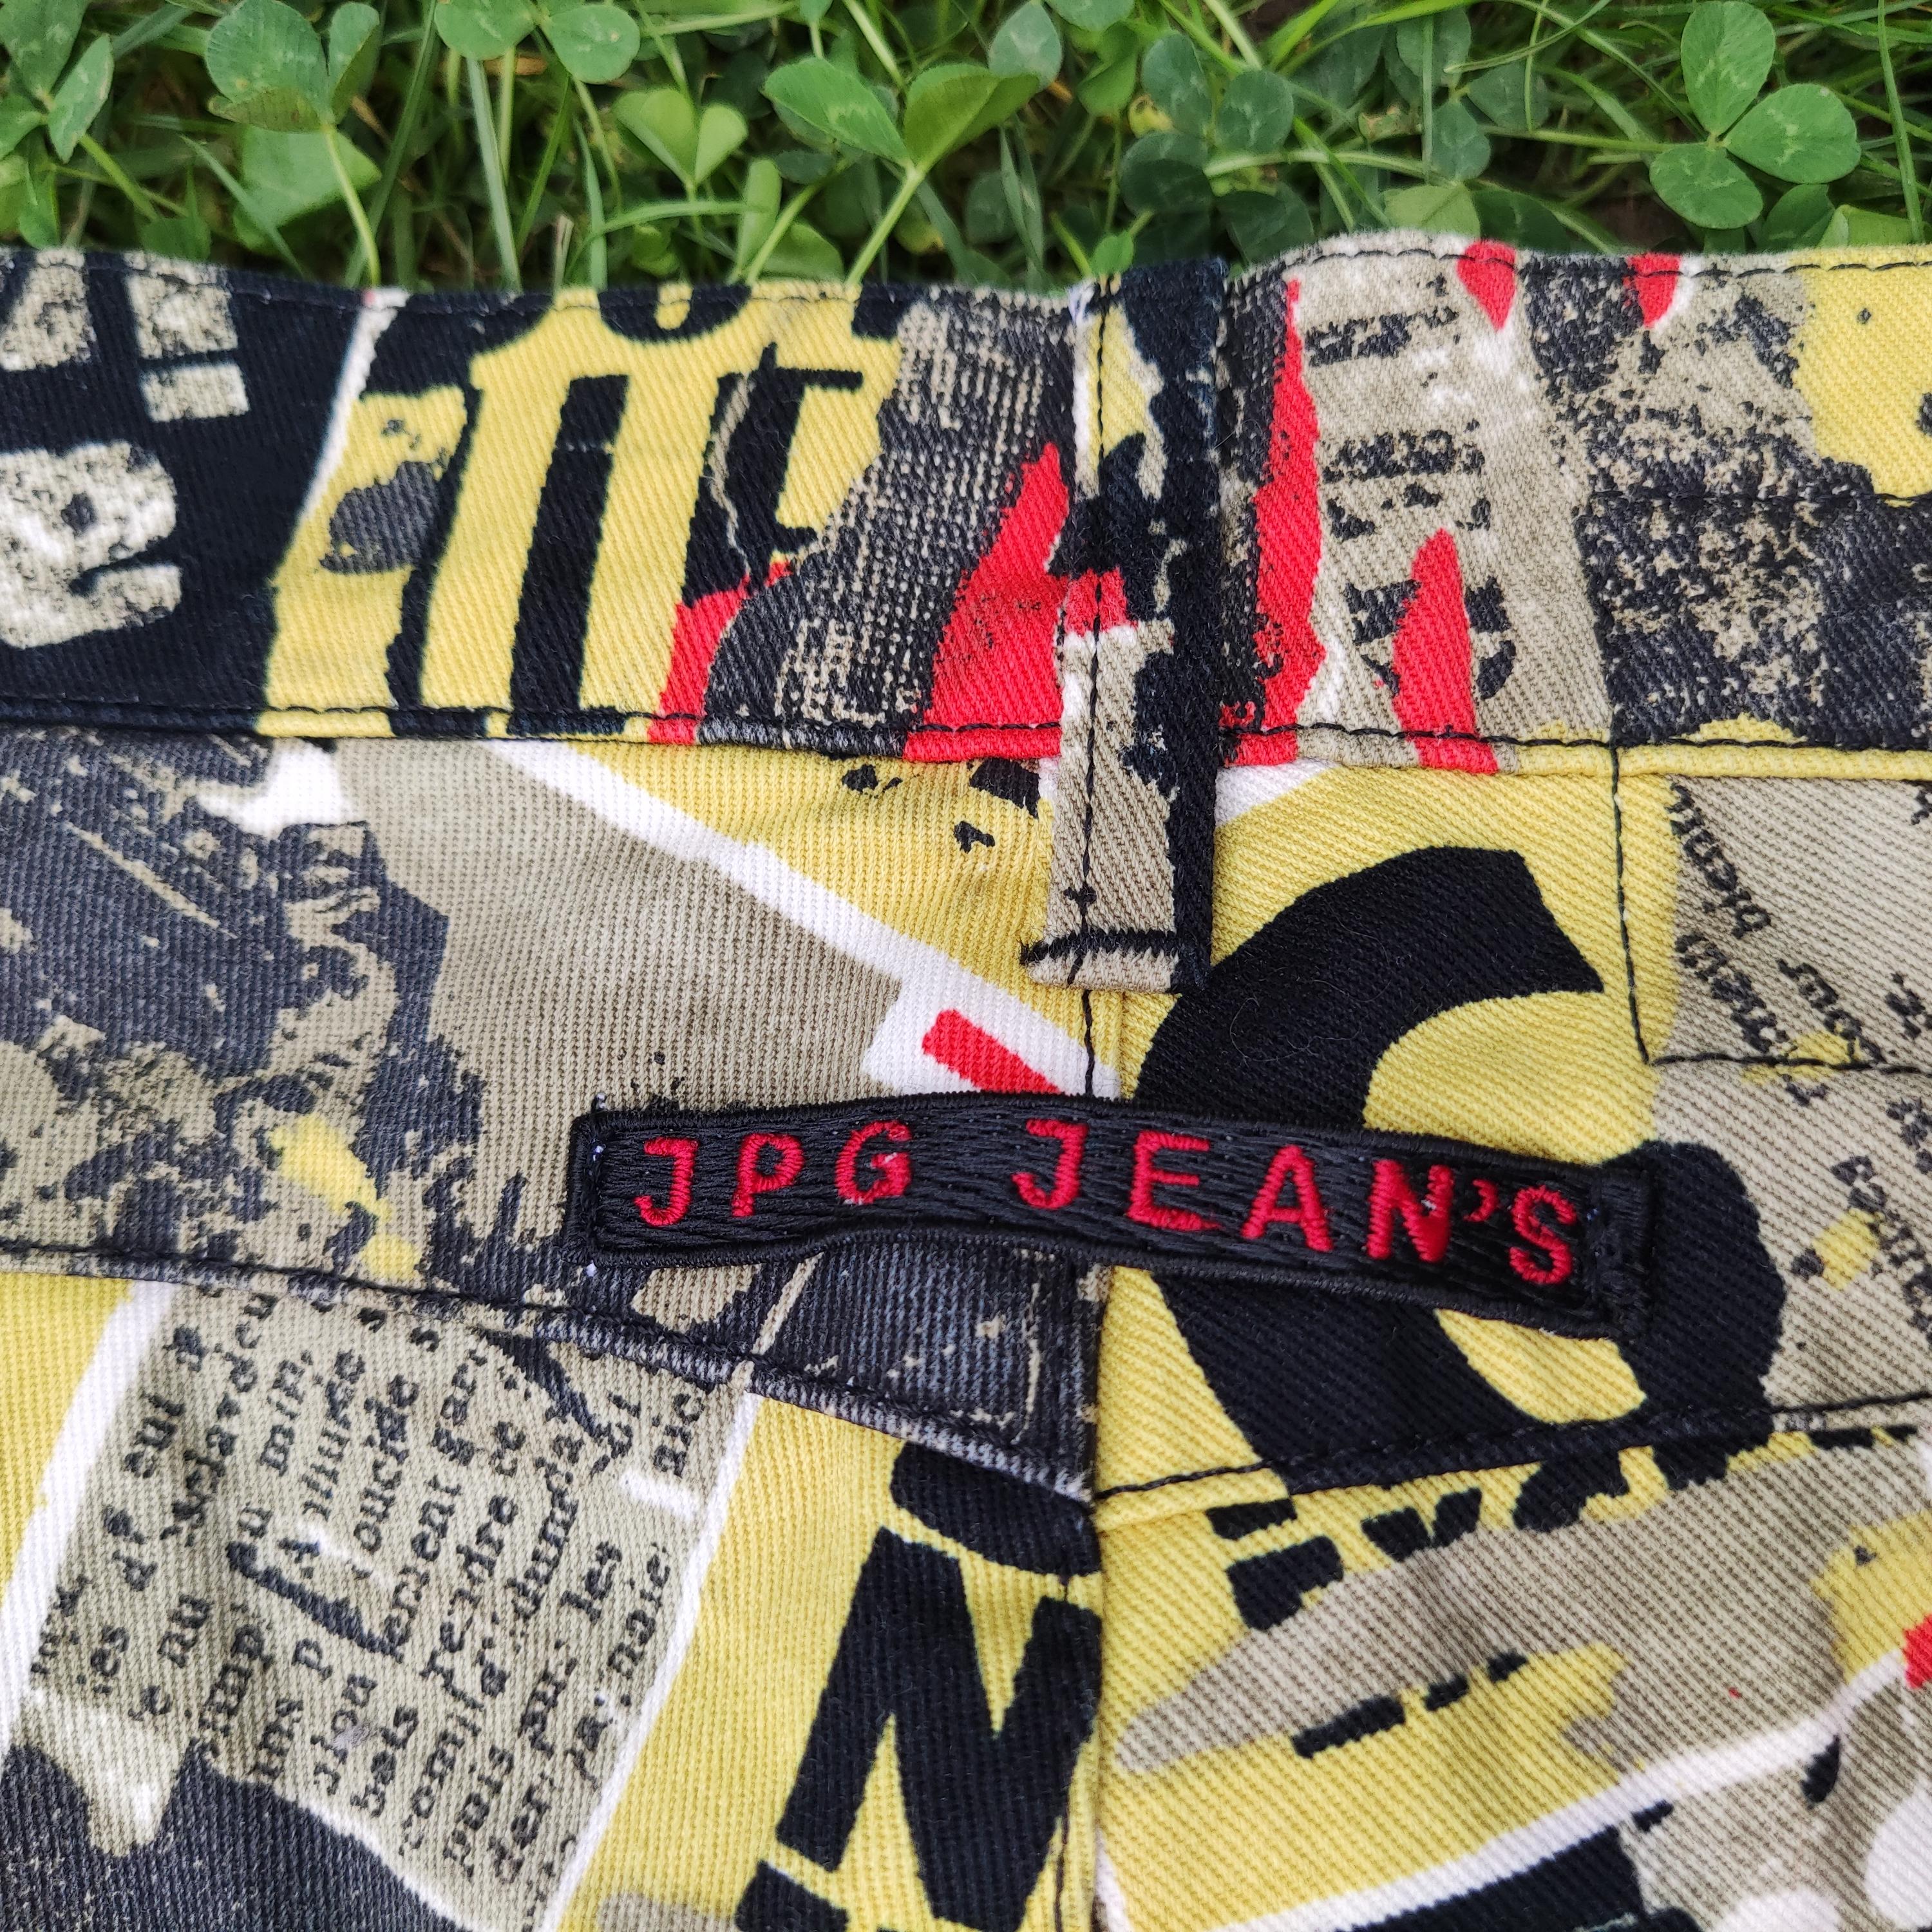 Jean Paul Gaultier Jeans Vintage Anarchy Fight Racism Punk 90s Trousers Pants For Sale 9